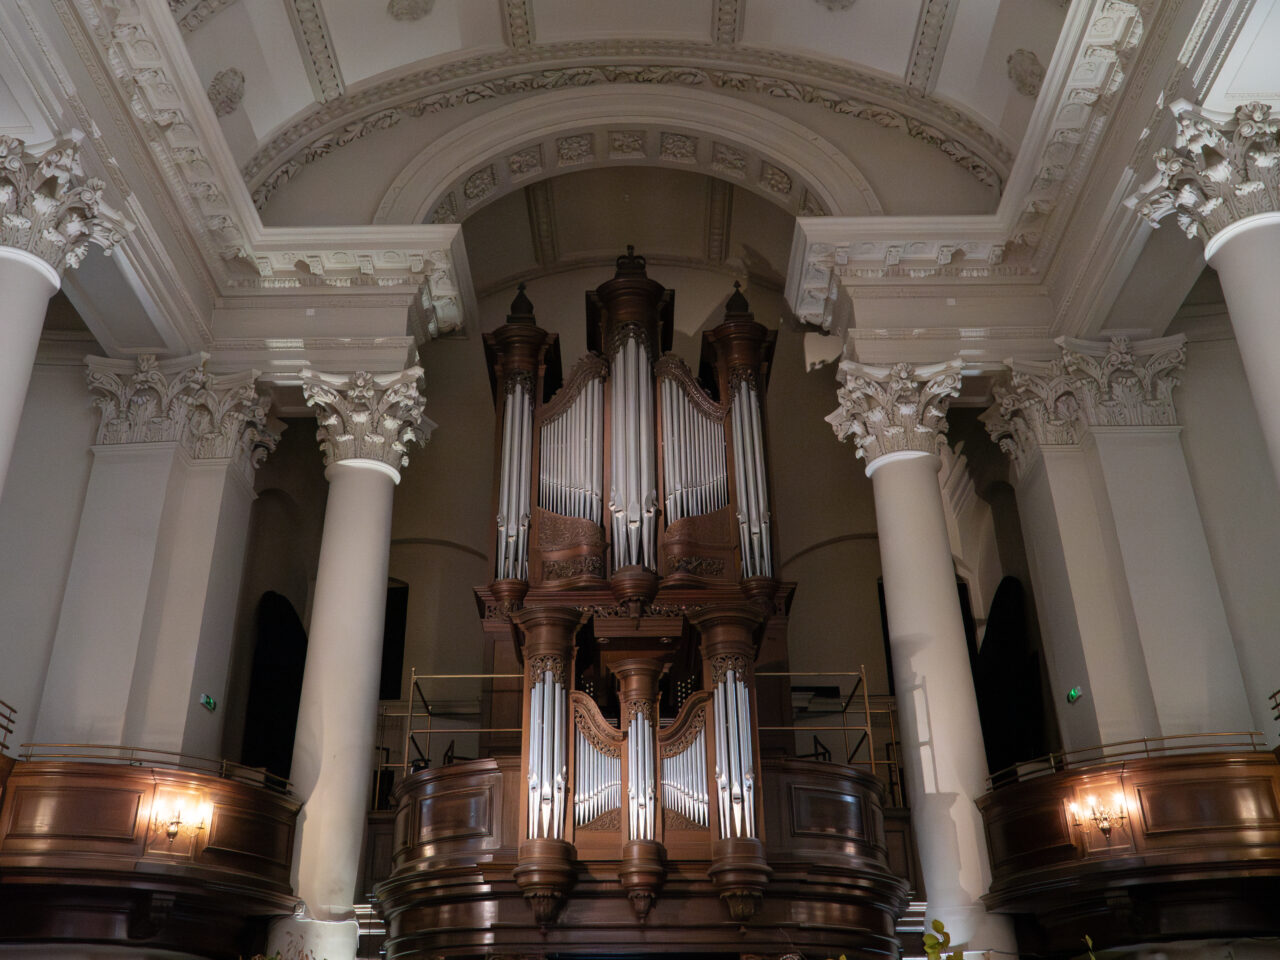 Smith Square's Klais organ